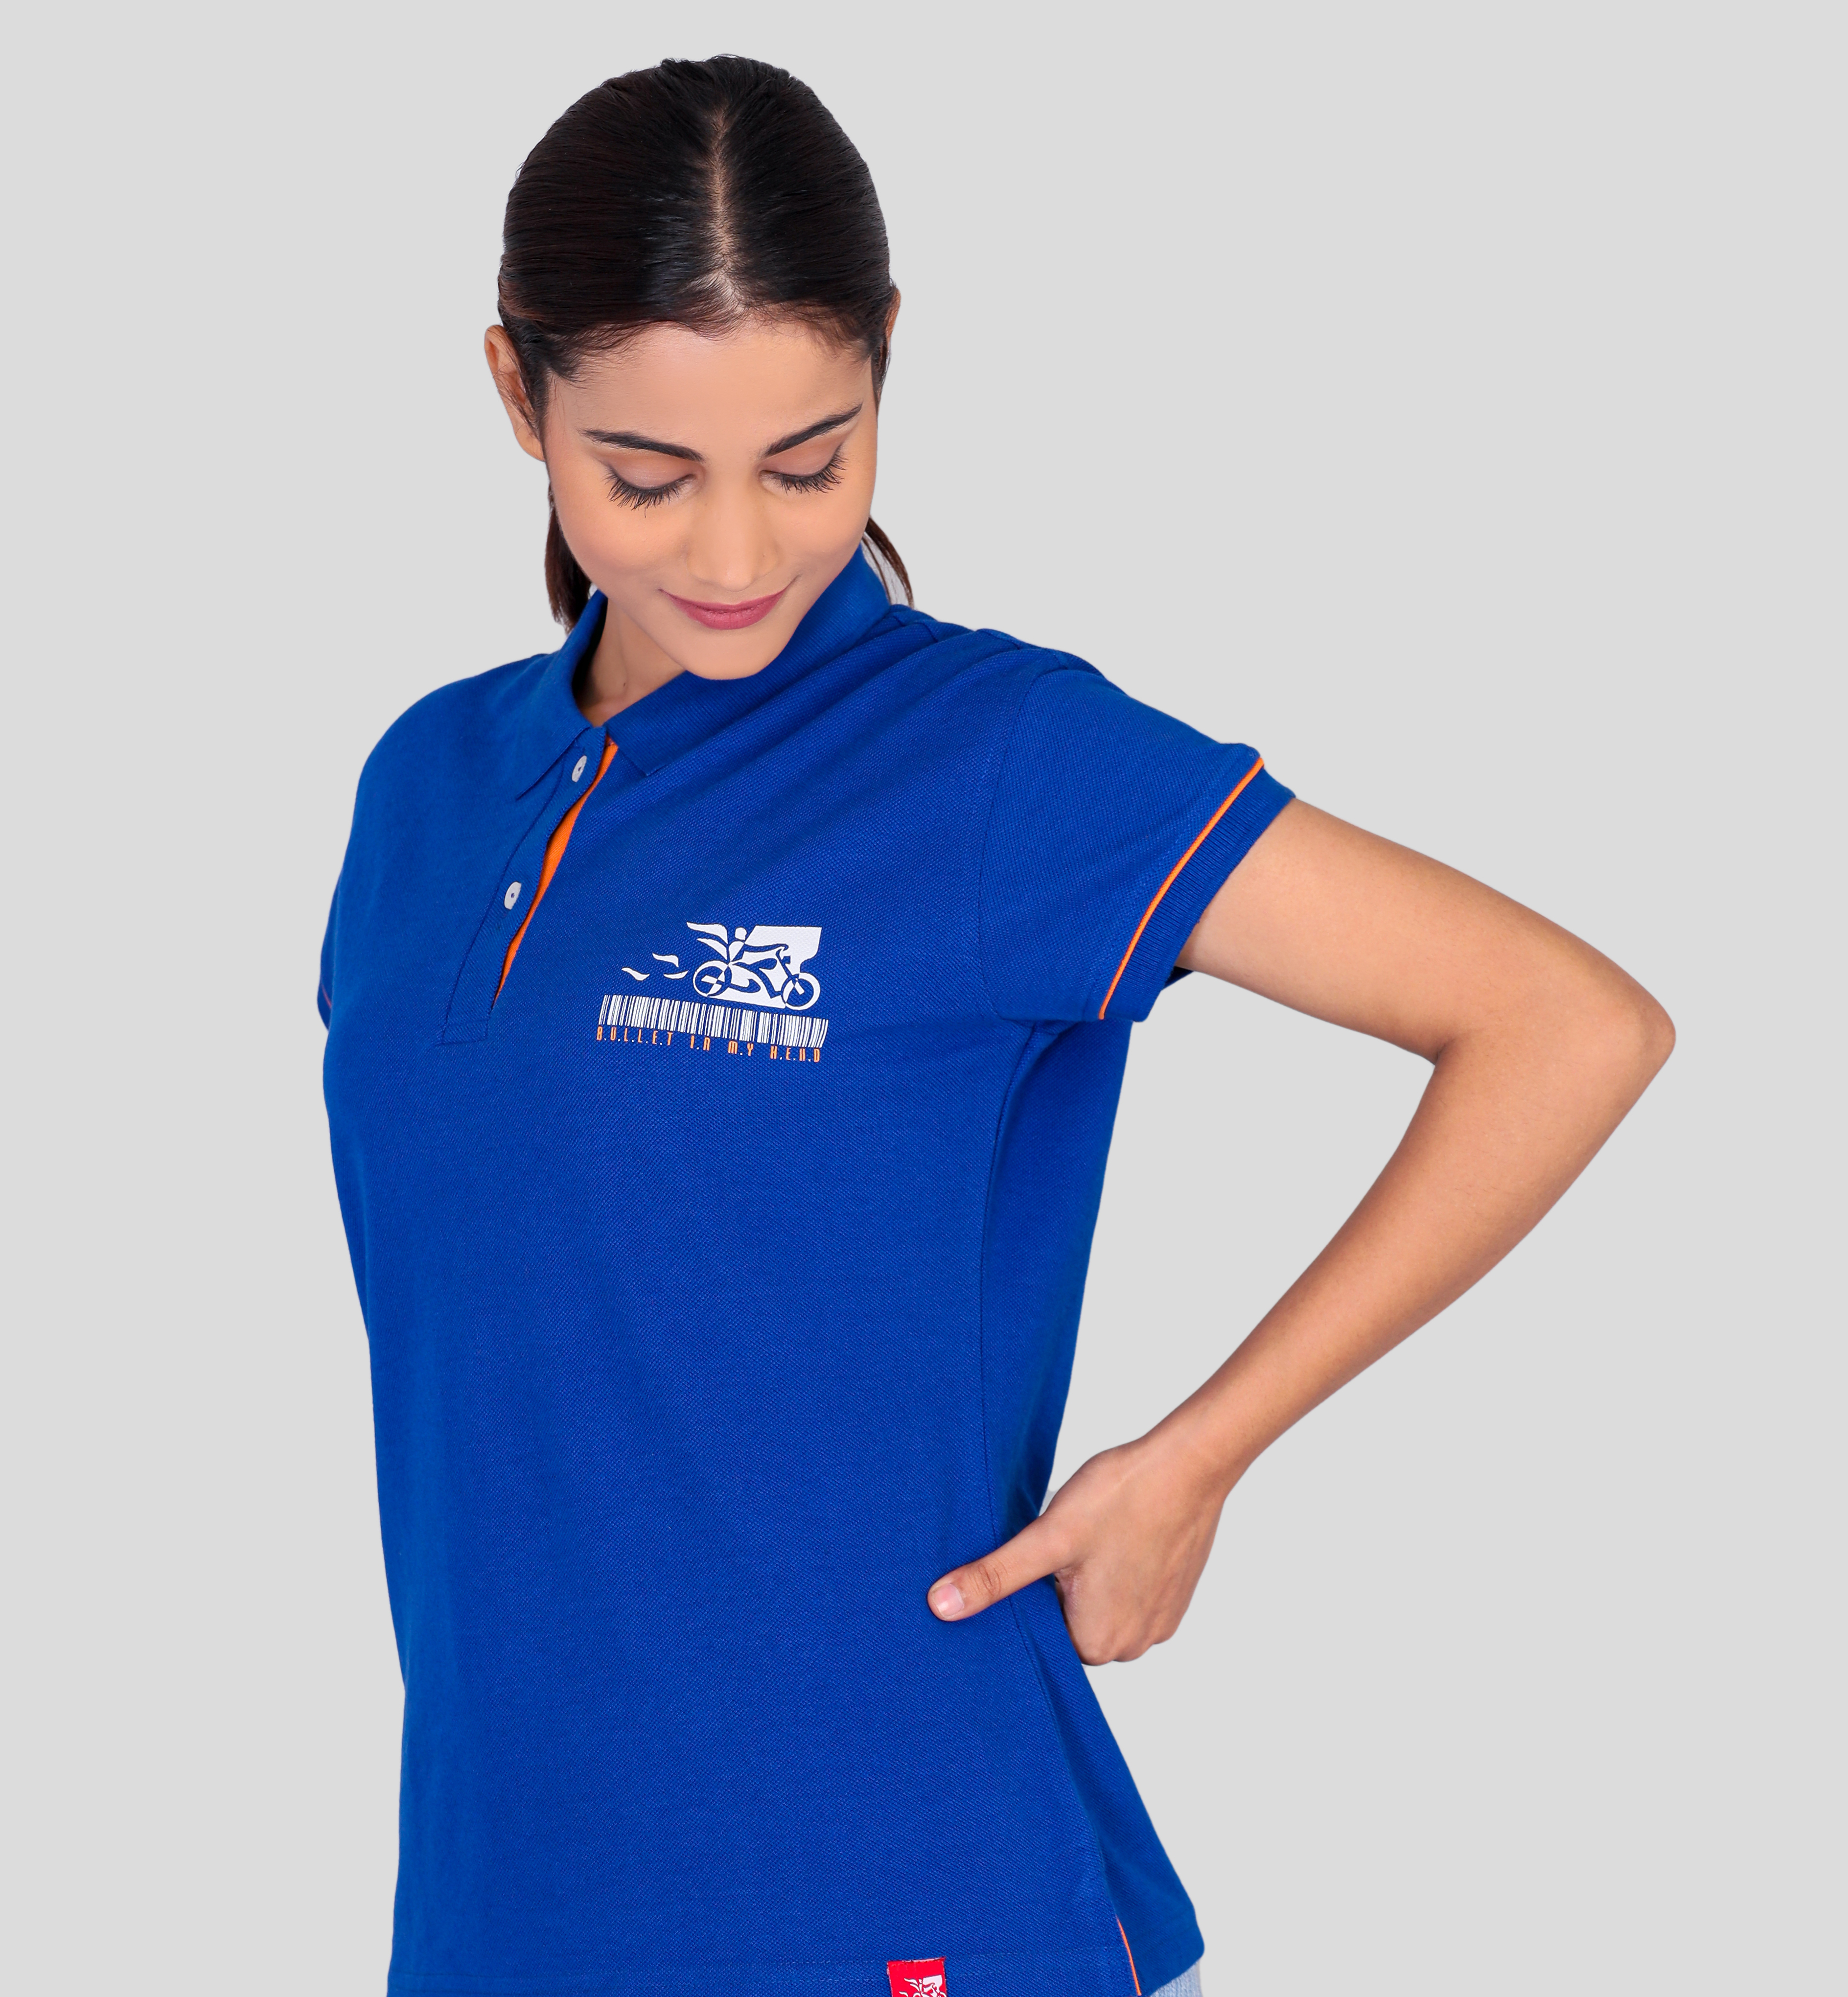 Bike blazer royal blue promotional polo t-shirts supplier 